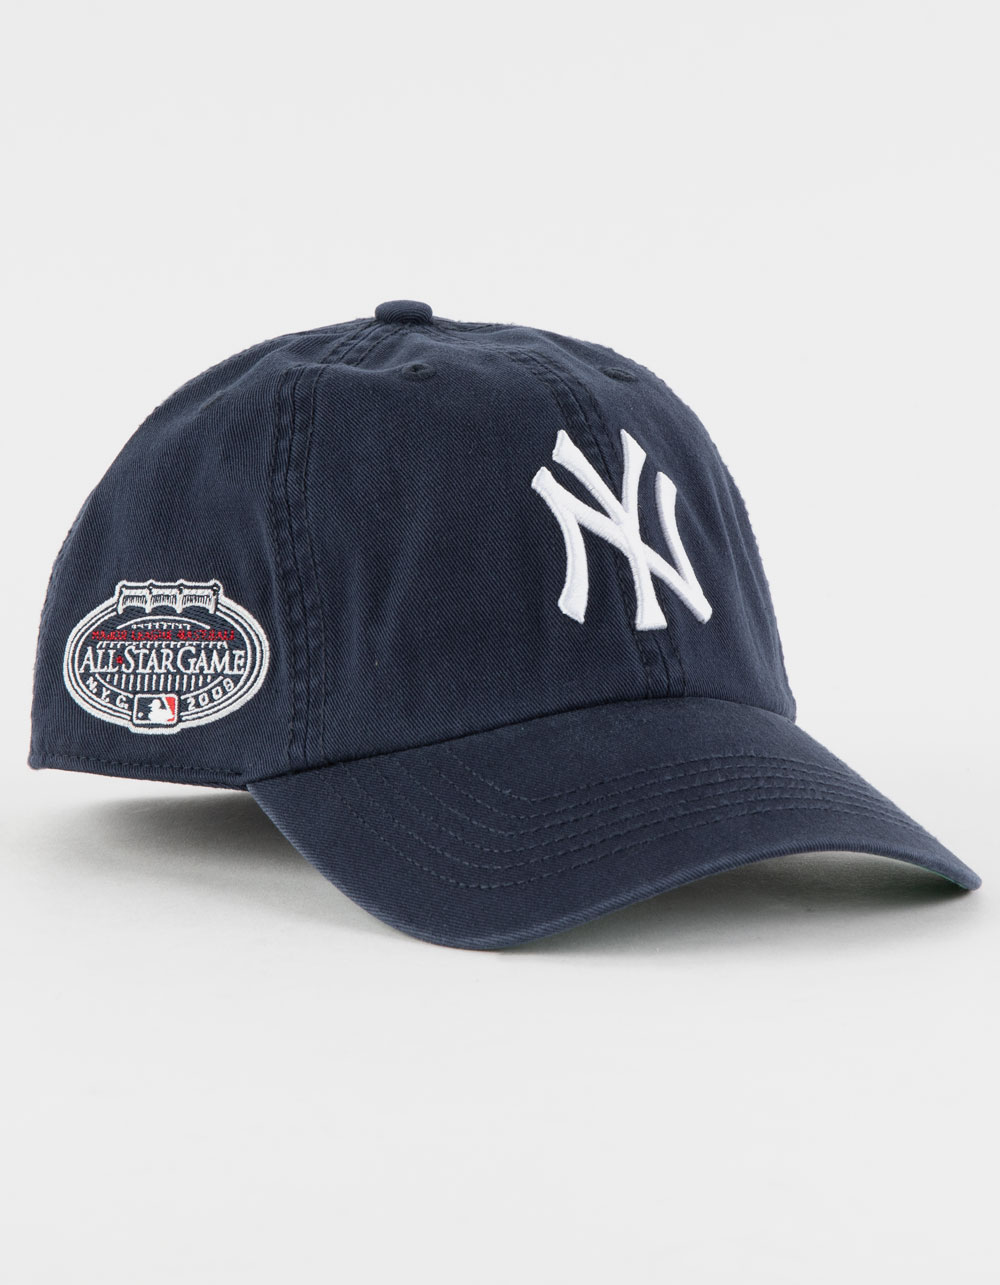 47 New York Yankees Baseball Hat Women's Navy One Size